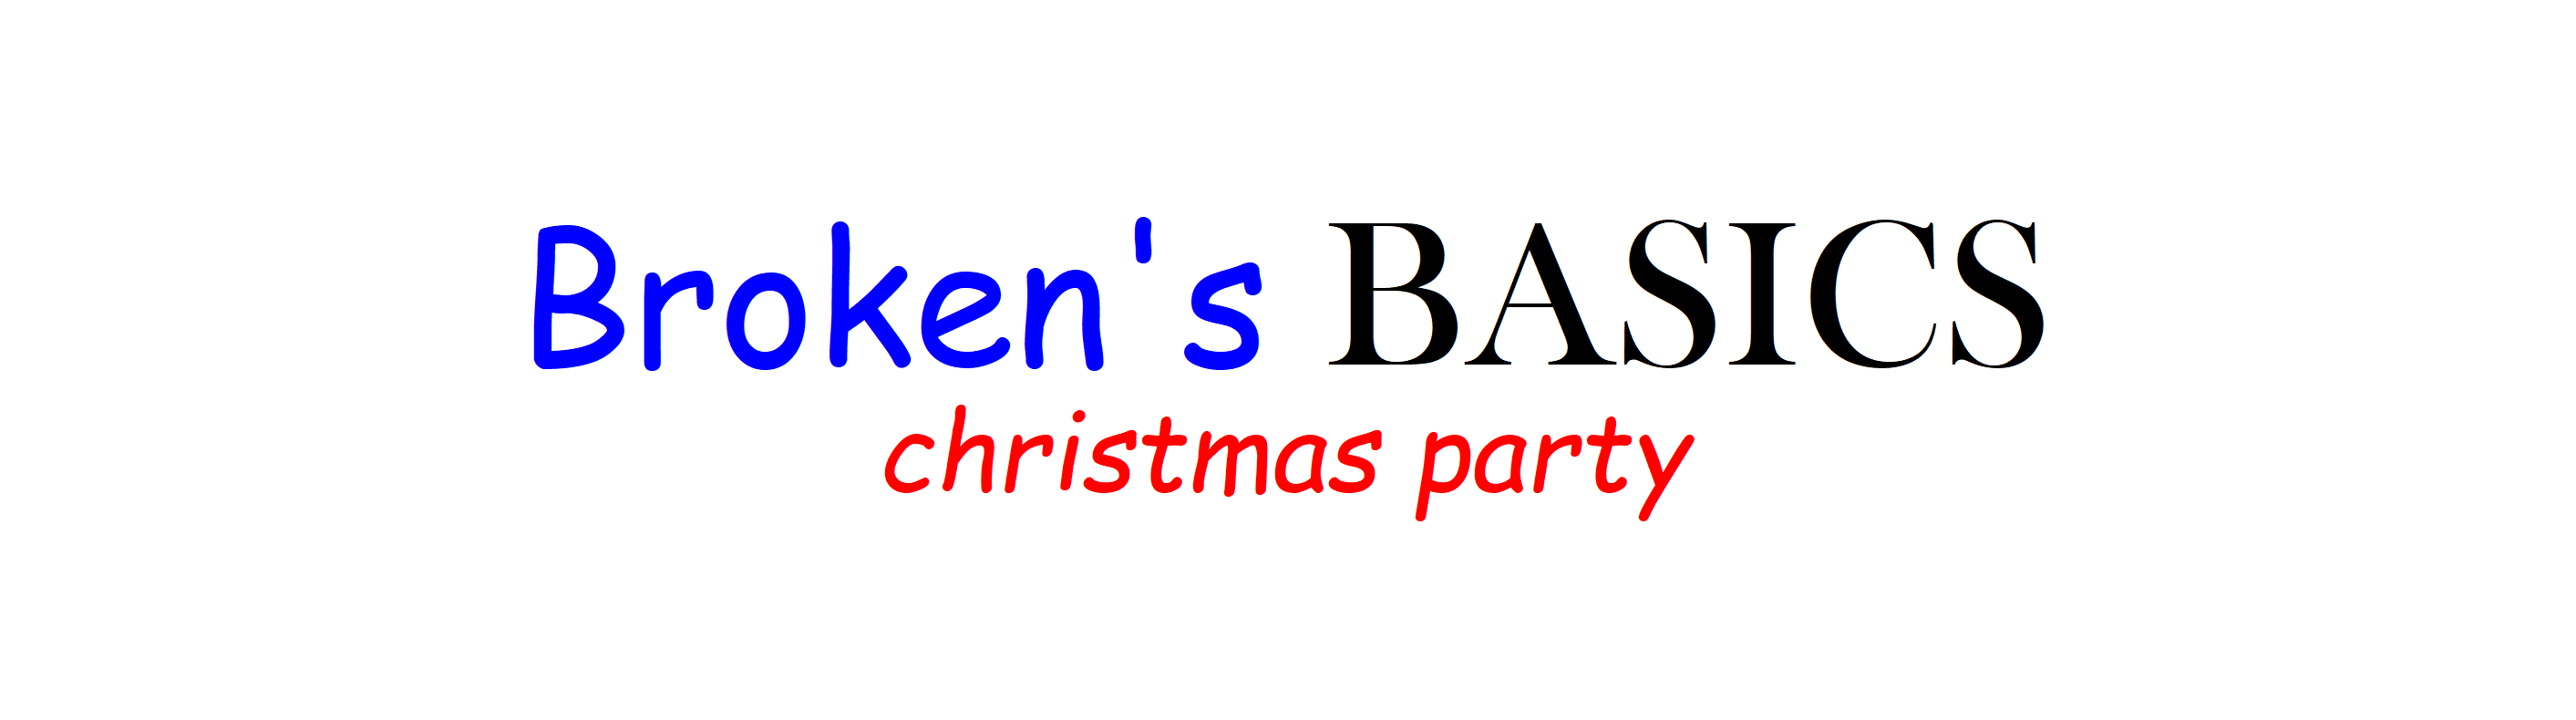 Broken's Basics Christmas Party